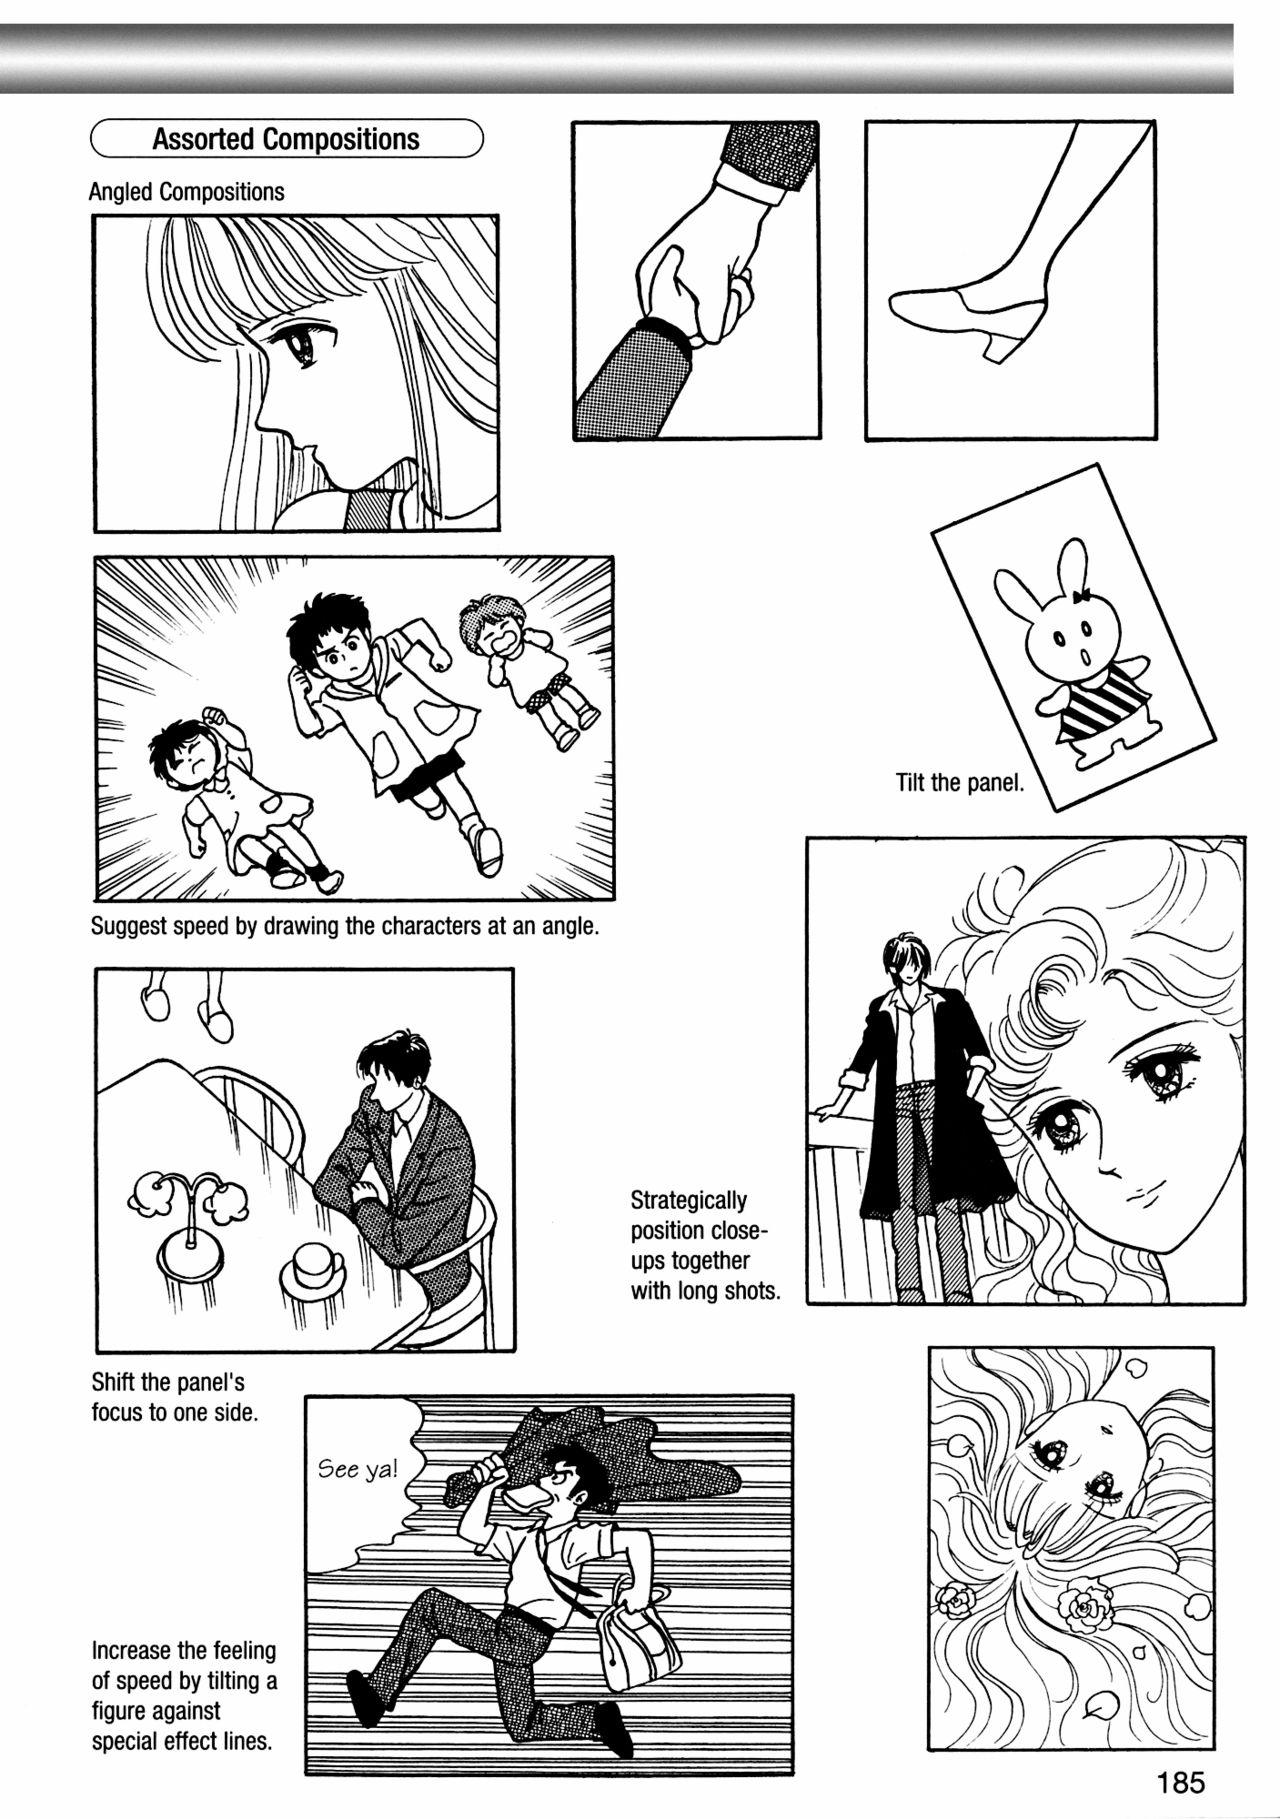 How to Draw Manga Vol. 8 - Super Basics by Angel Matsumoto 189